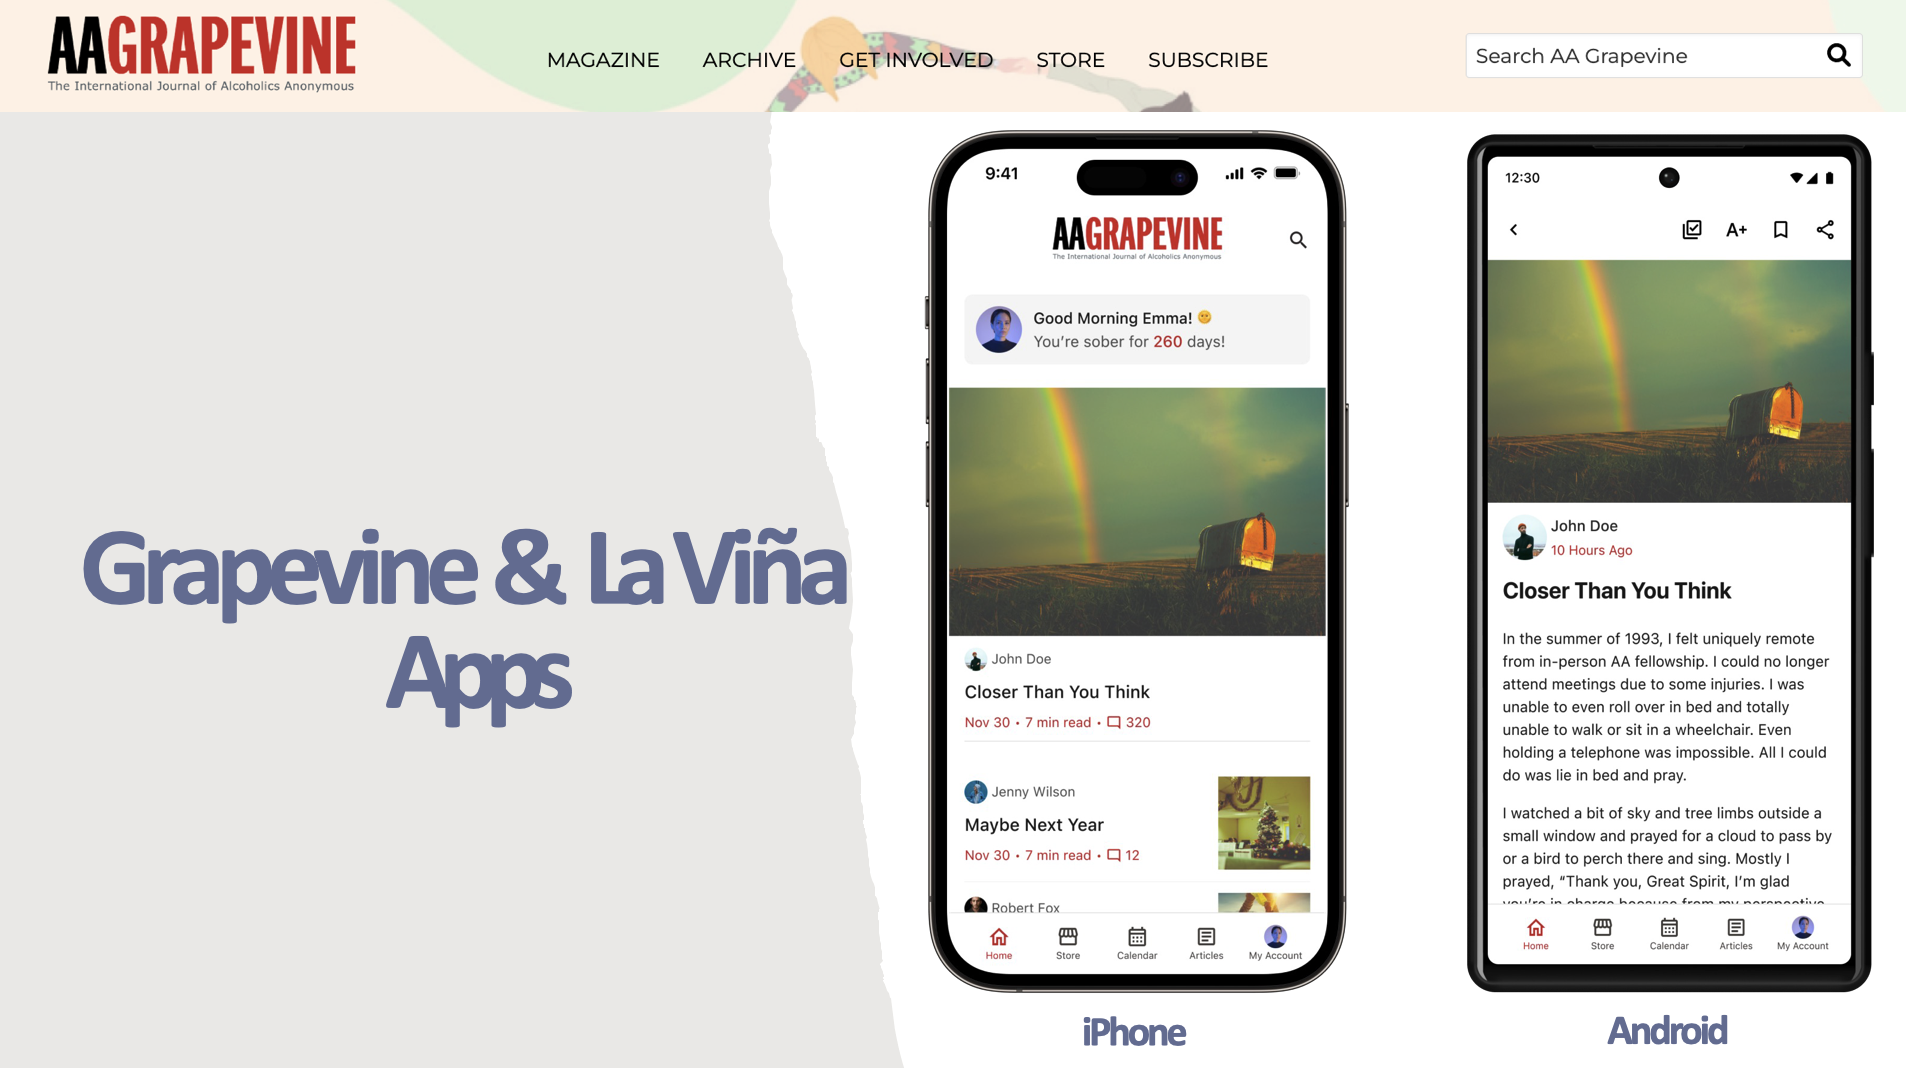 NEW Grapevine & La Viña Apps